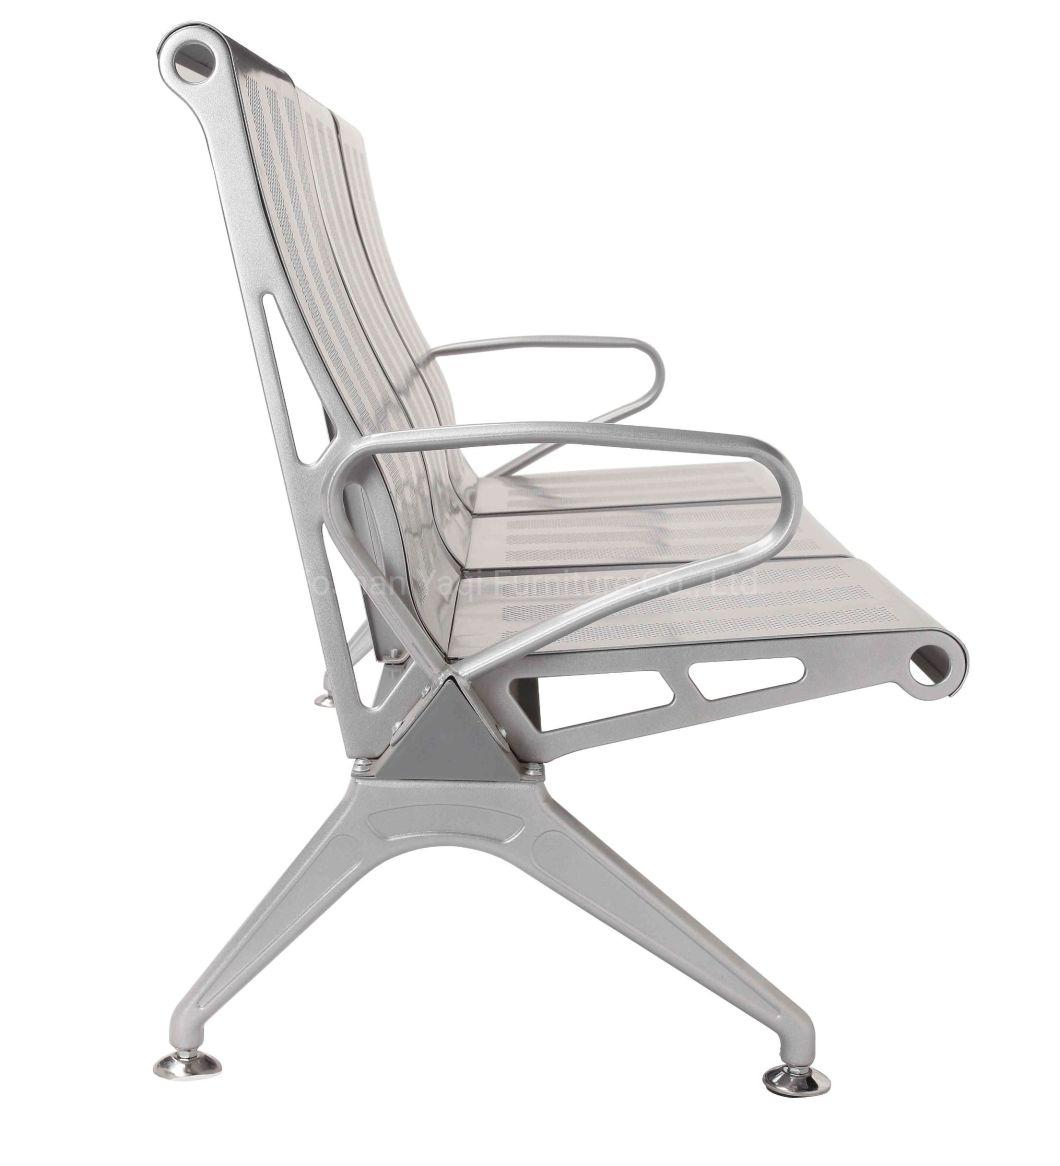 Colourful Salon Bank Airport Hospital Waiting Chair Reception Chair (YA-J108)